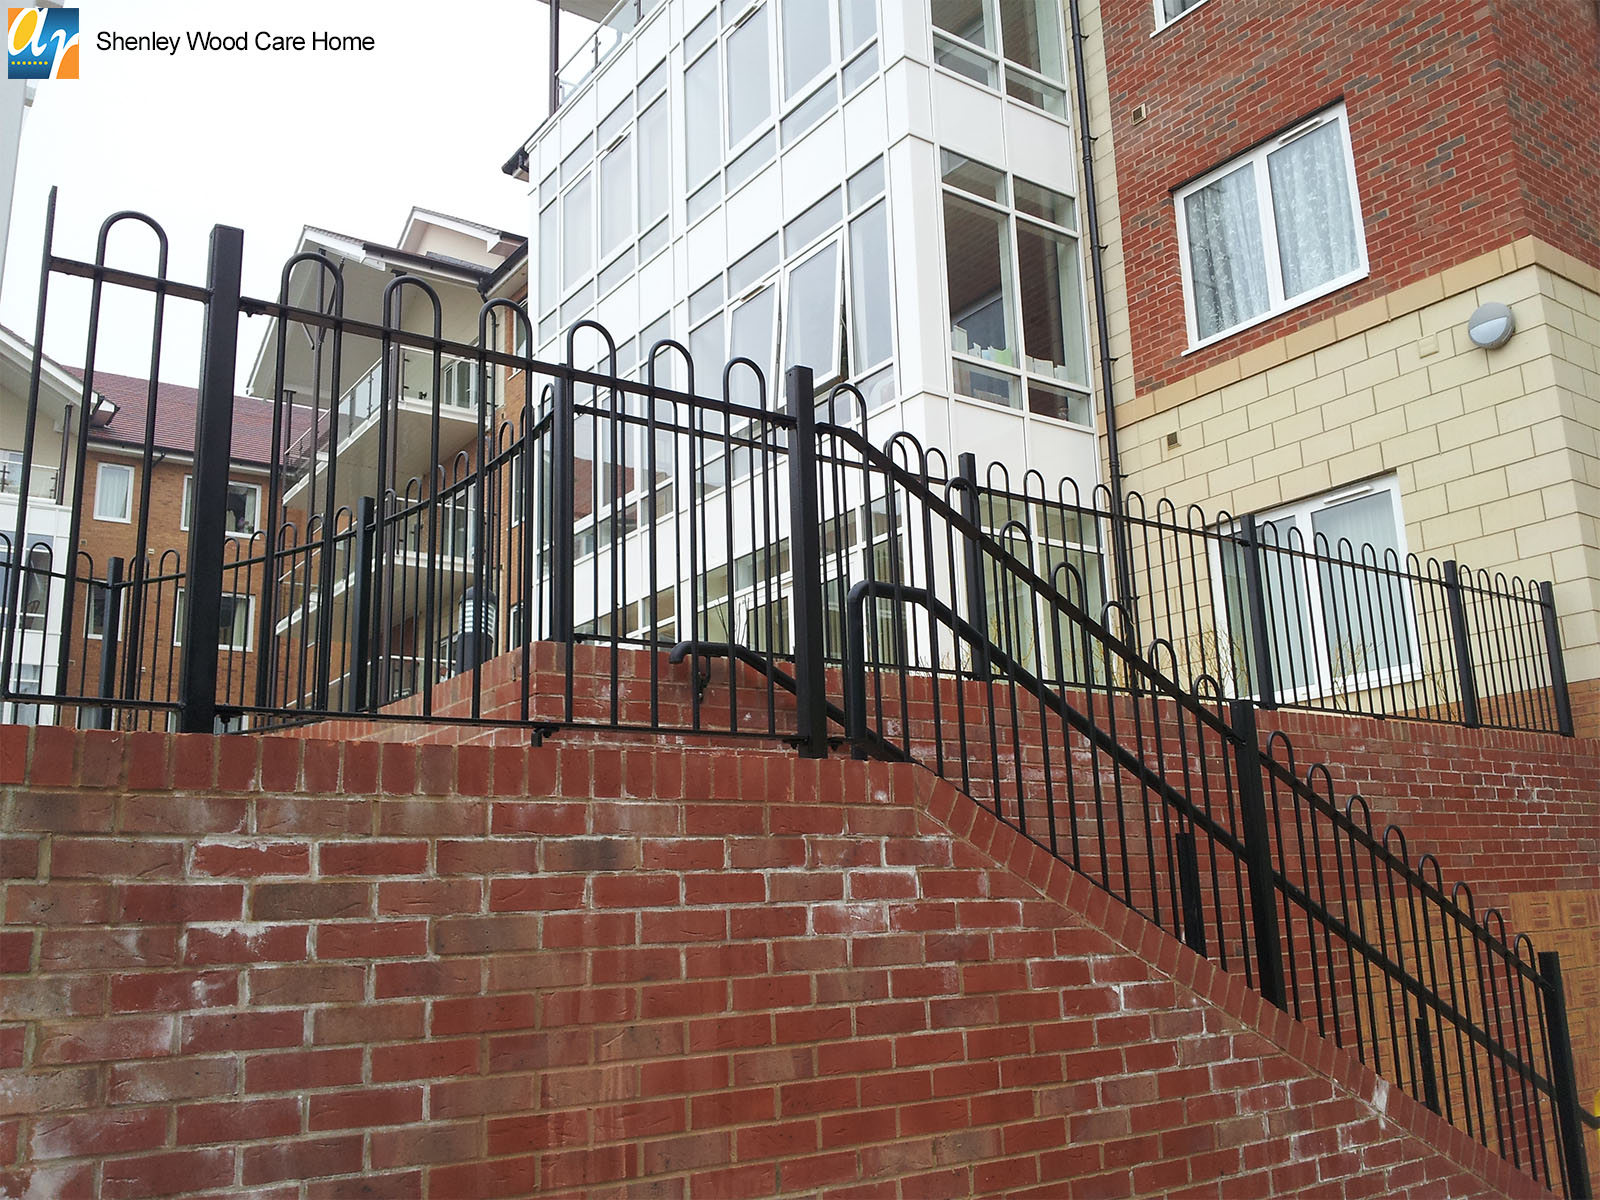 Metal railings for care homes